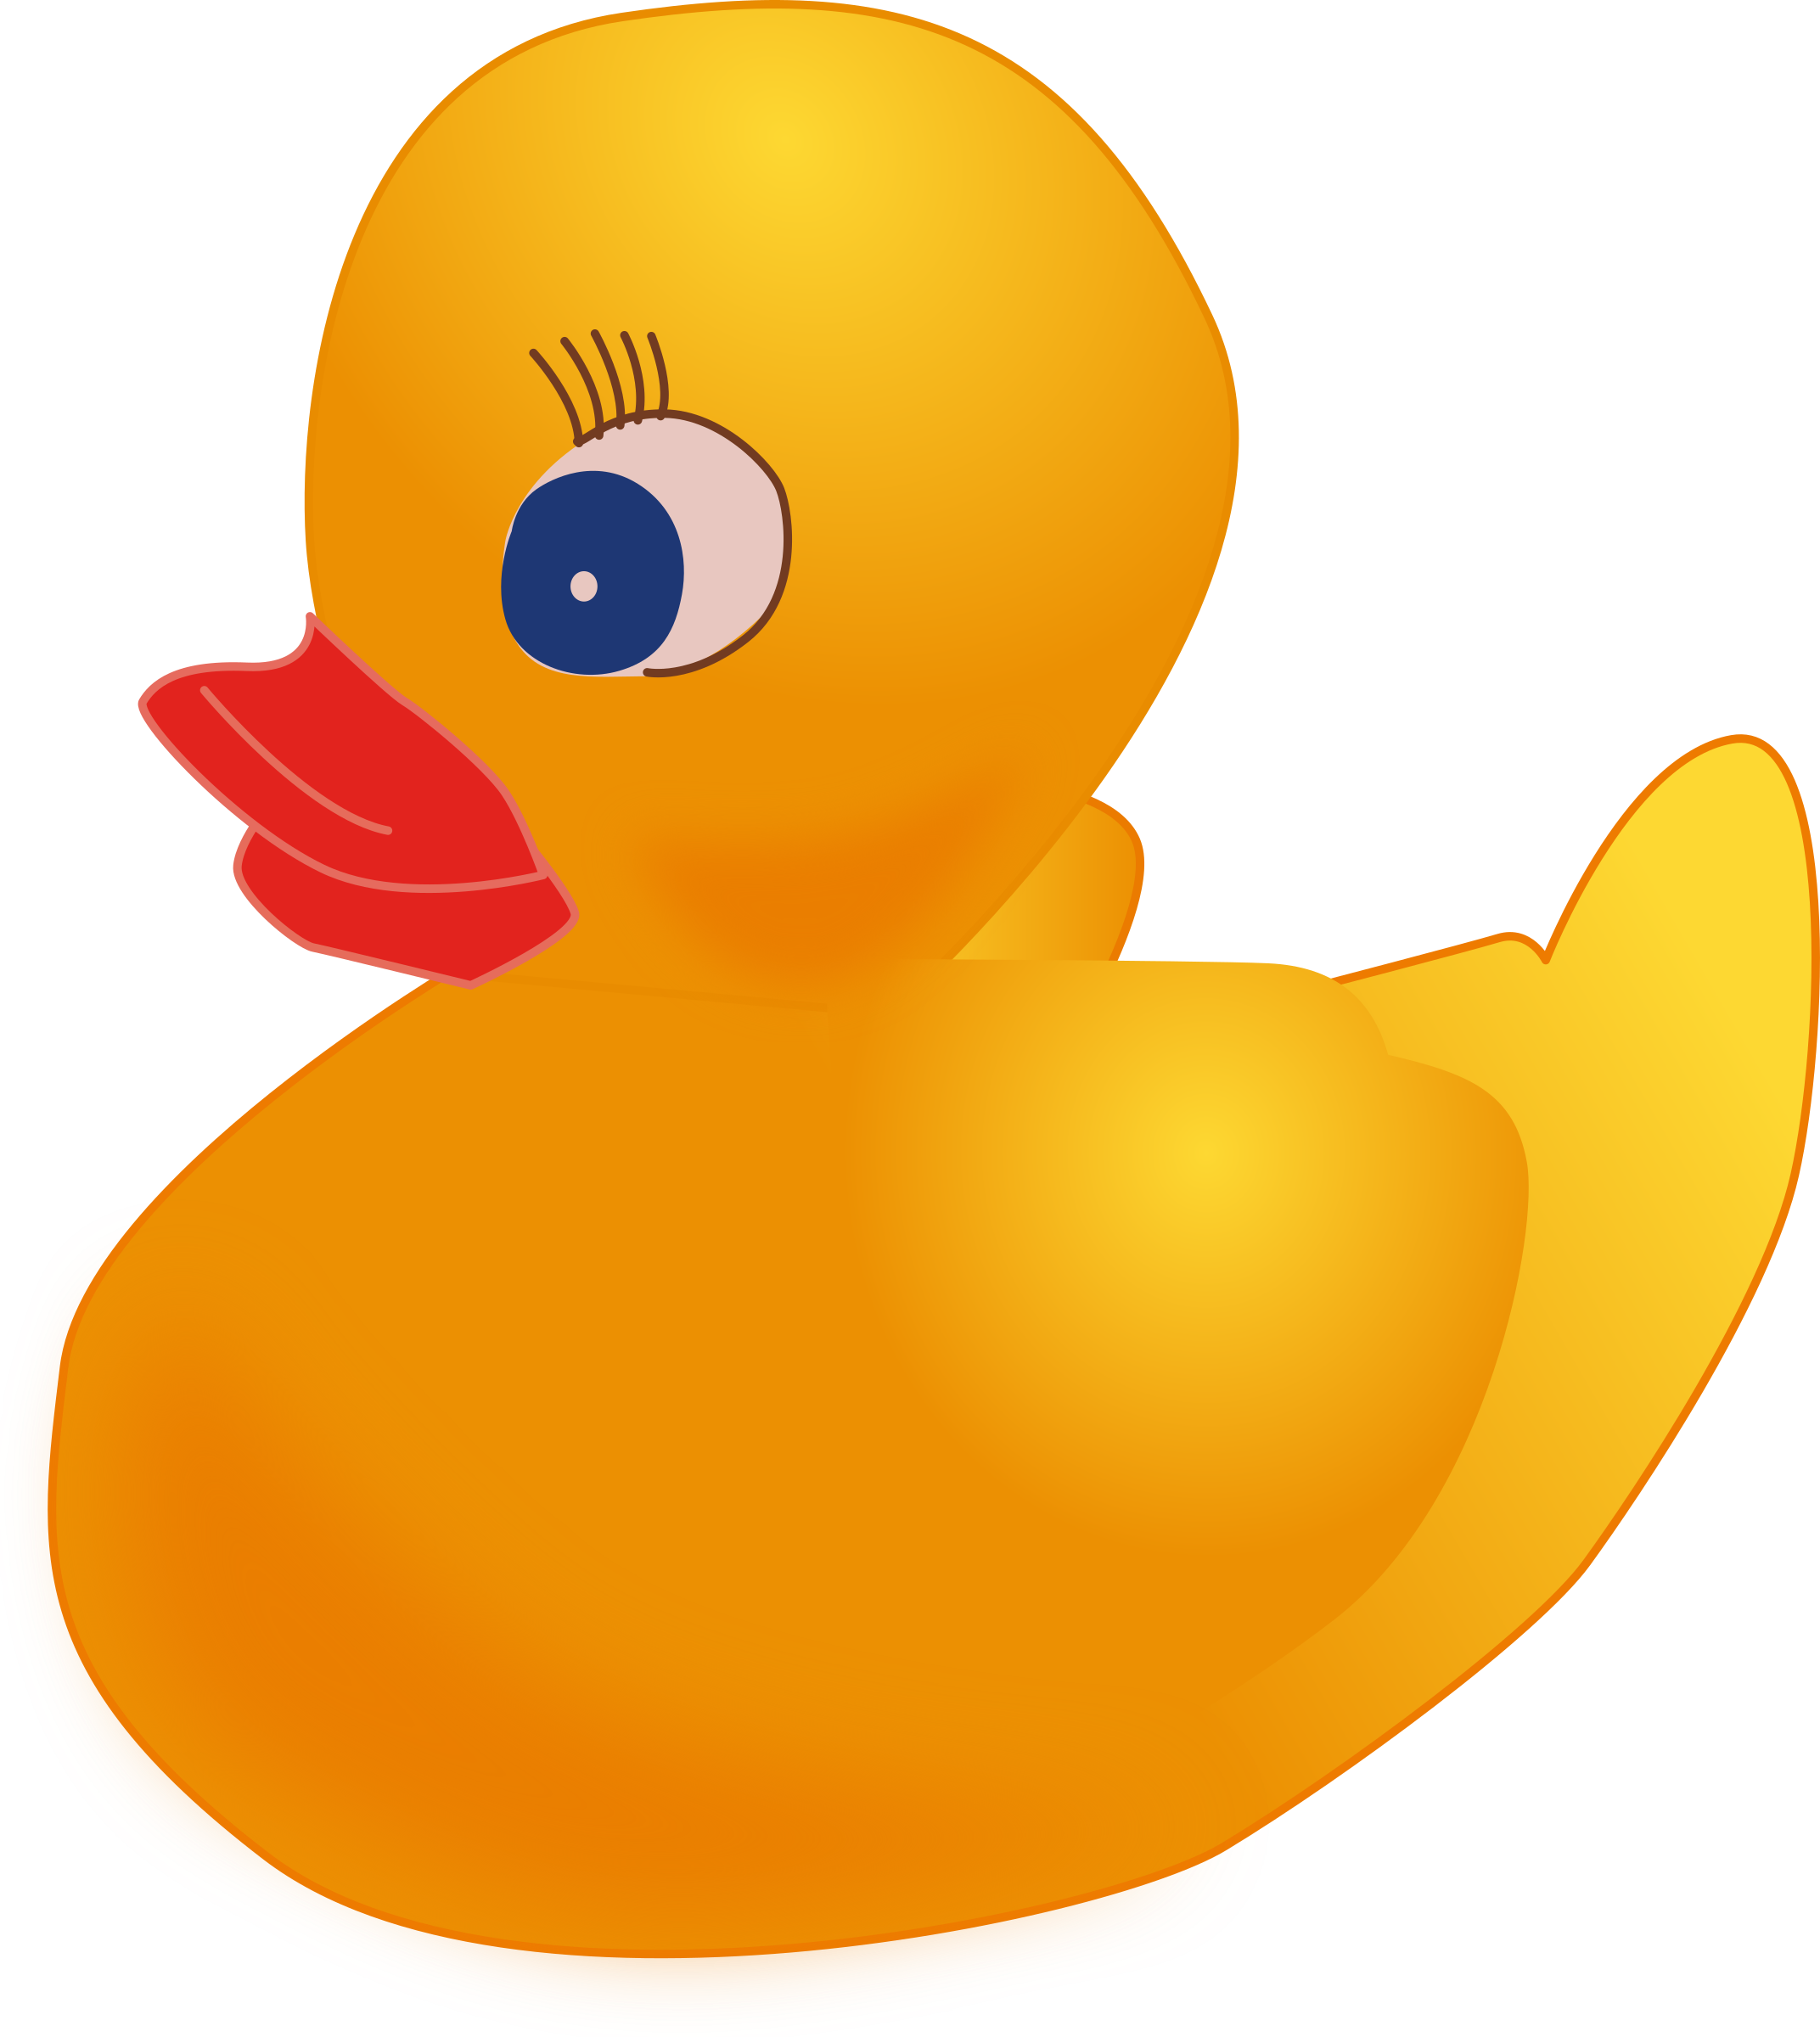 Female rubber ducky.